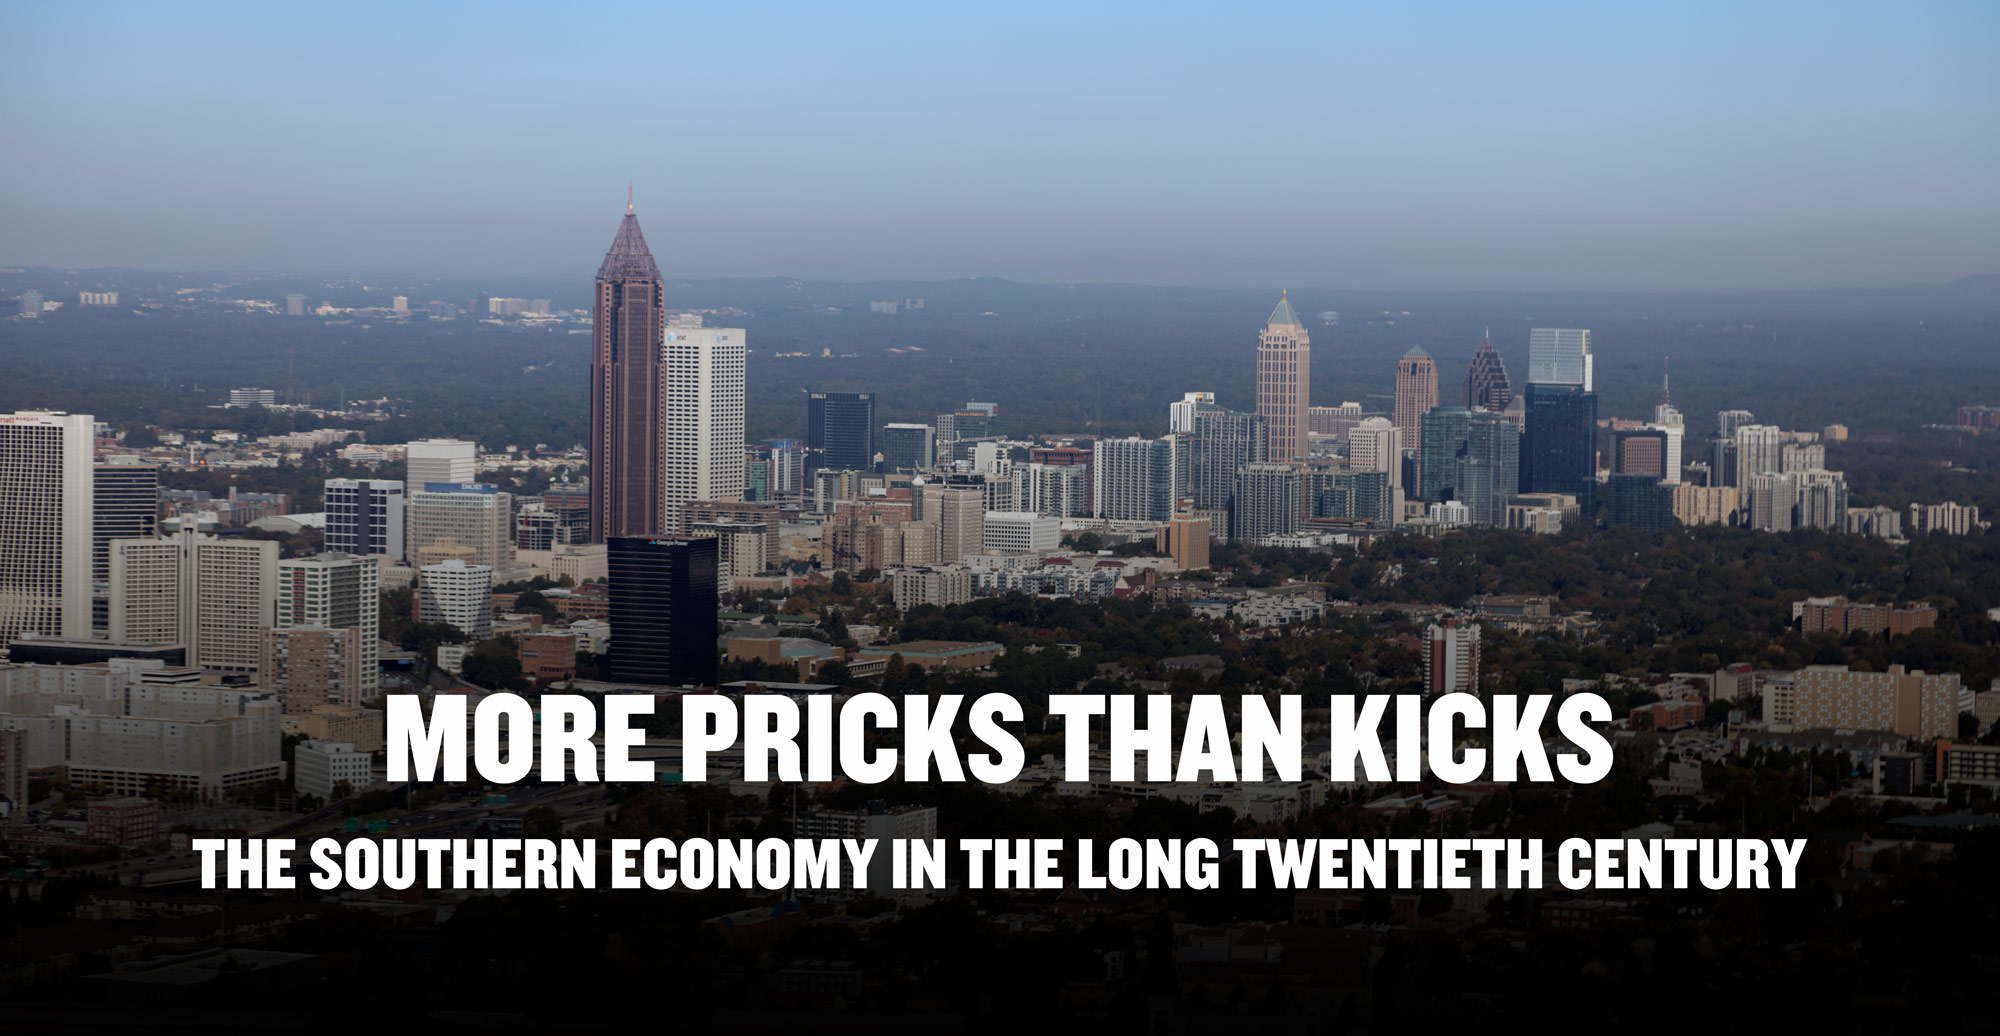 More Pricks Than Kicks: The Southern Economy in the Long Twentieth Century